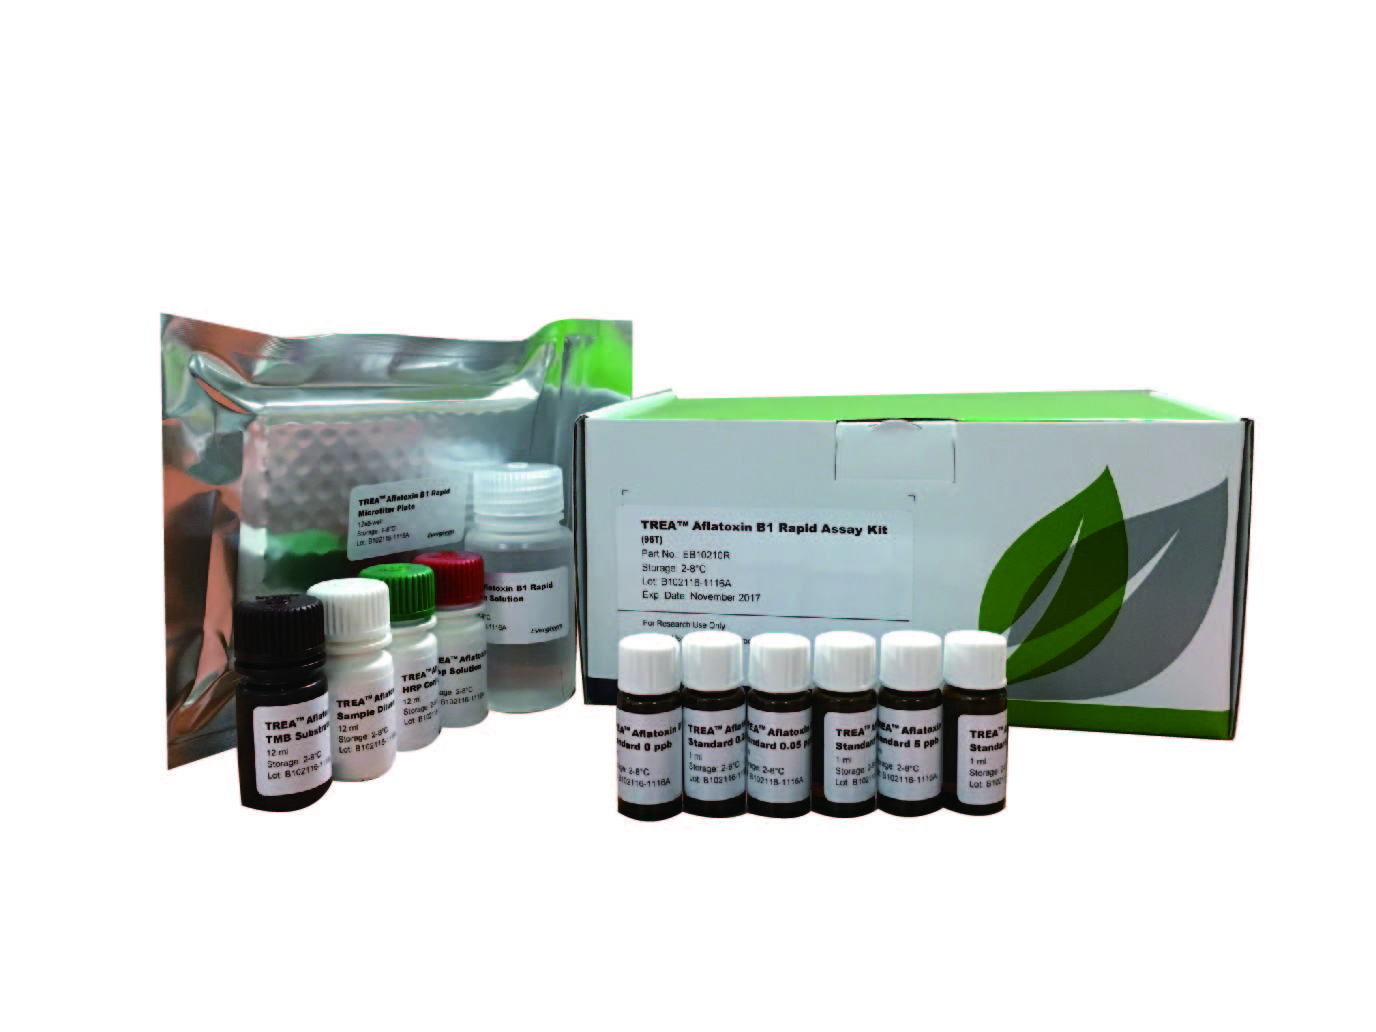 Evergreen黄/曲霉毒素M1竞争性ELISA检测试剂盒